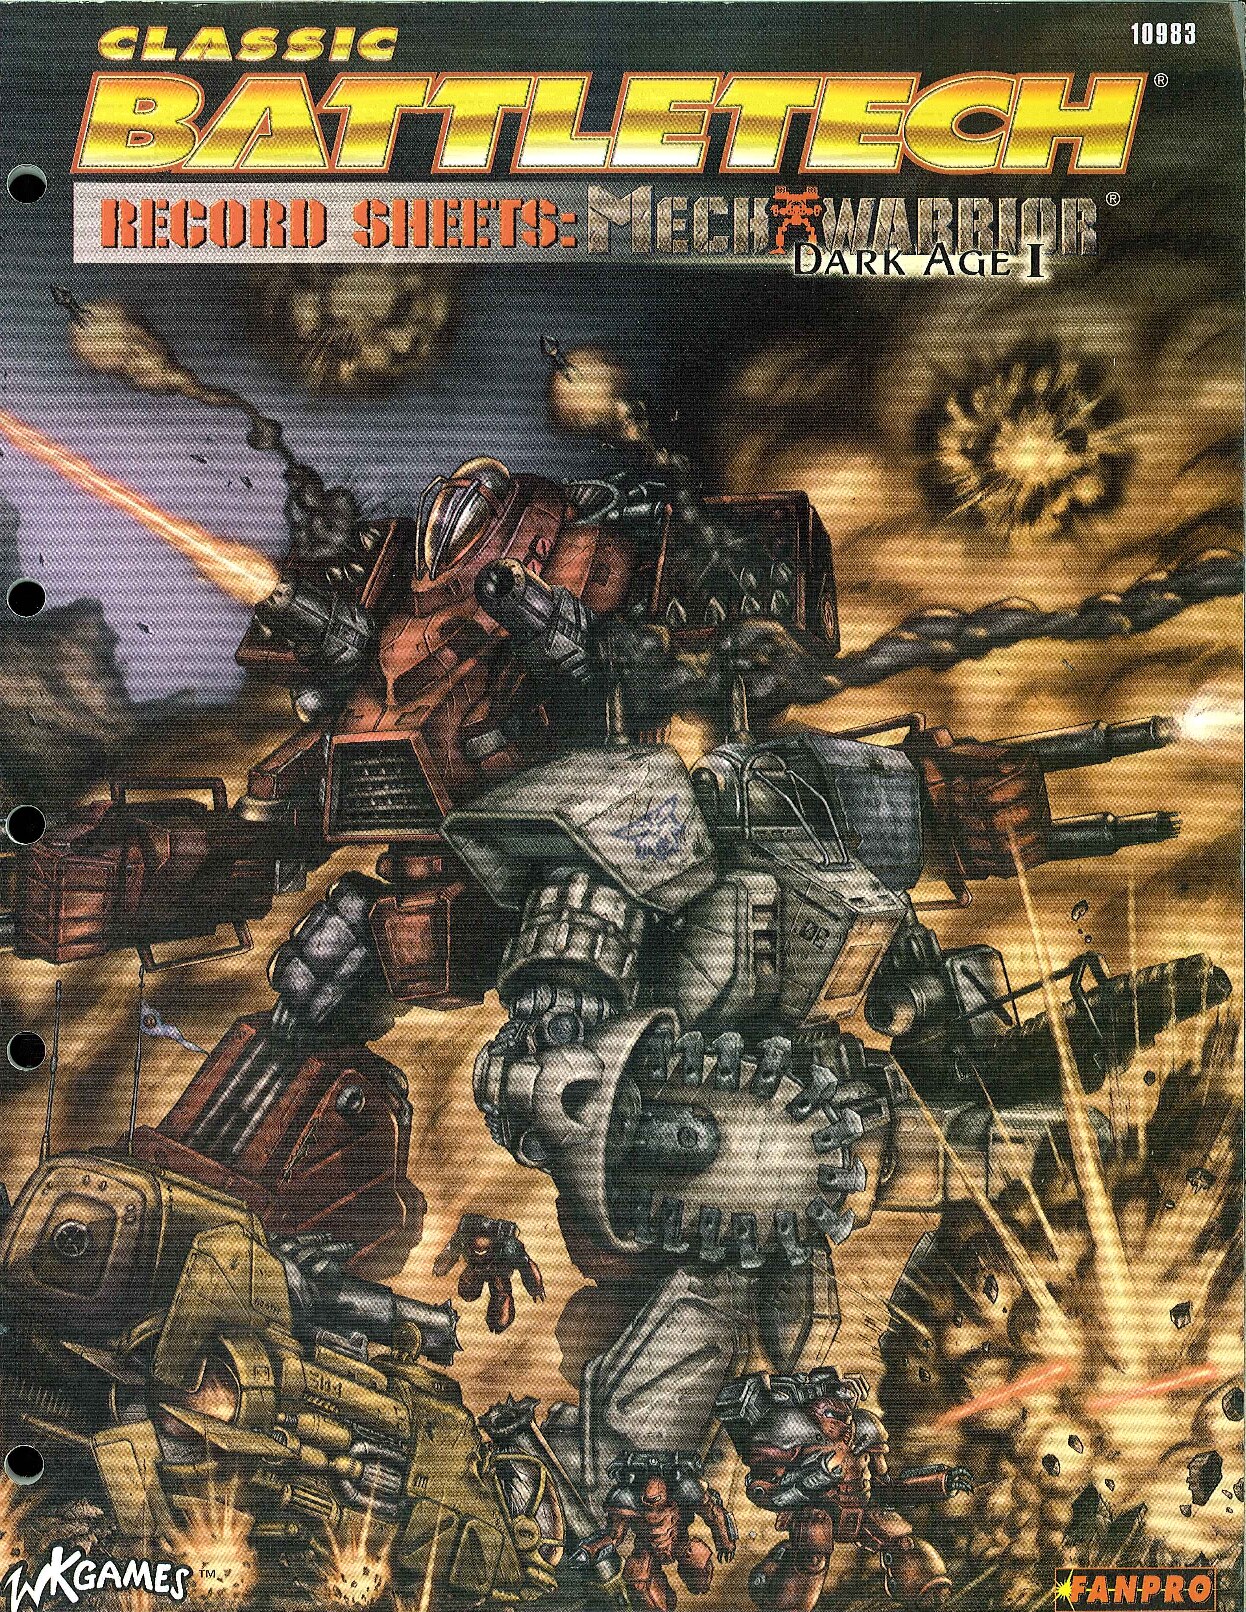 Classic Battletech Record Sheets - Mechwarrior Dark Age I